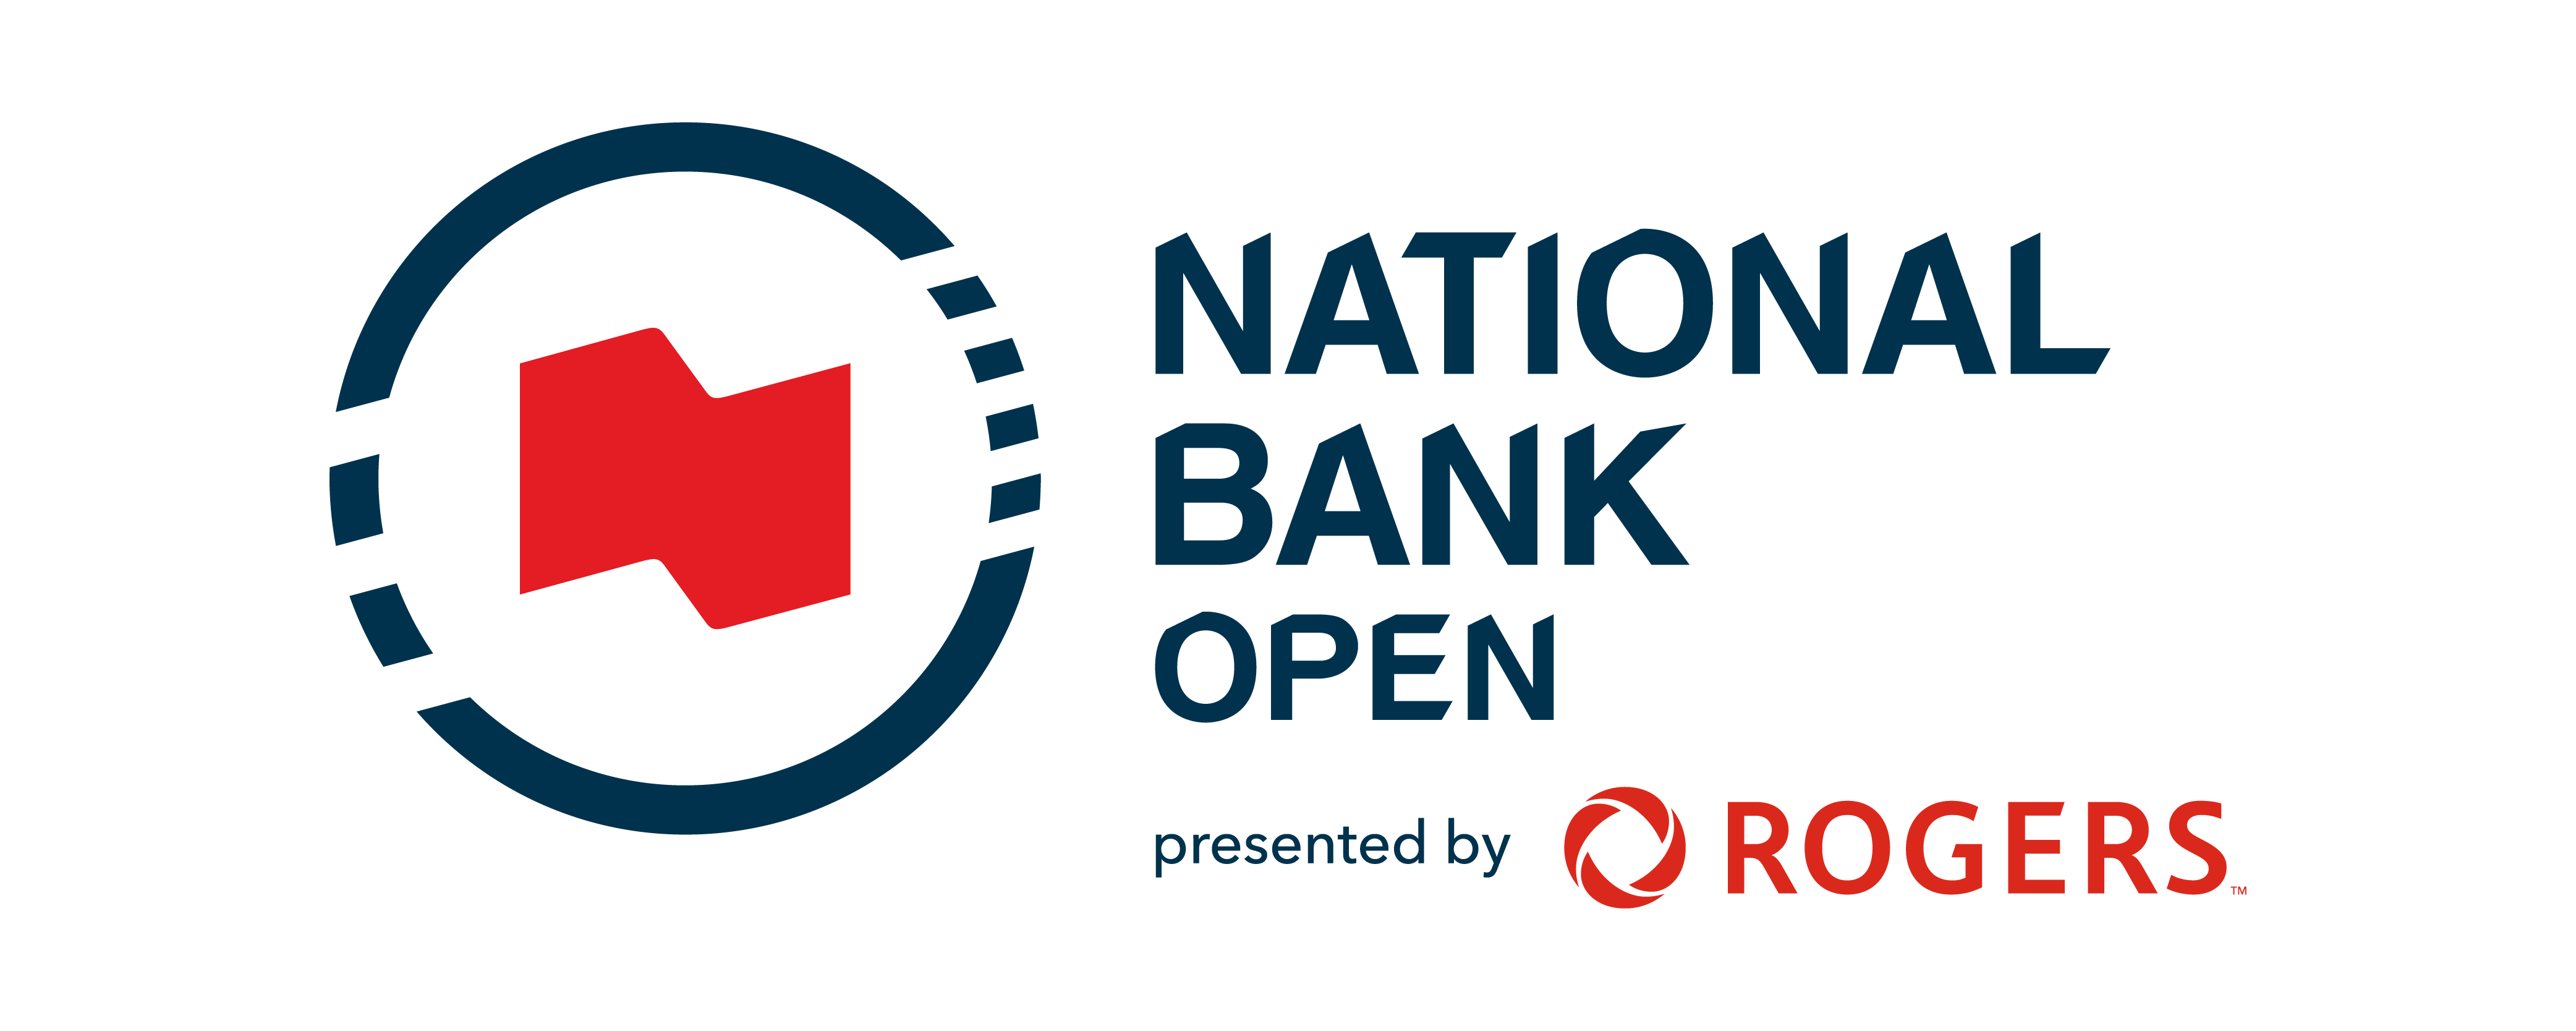 NATIONAL BANK OPEN